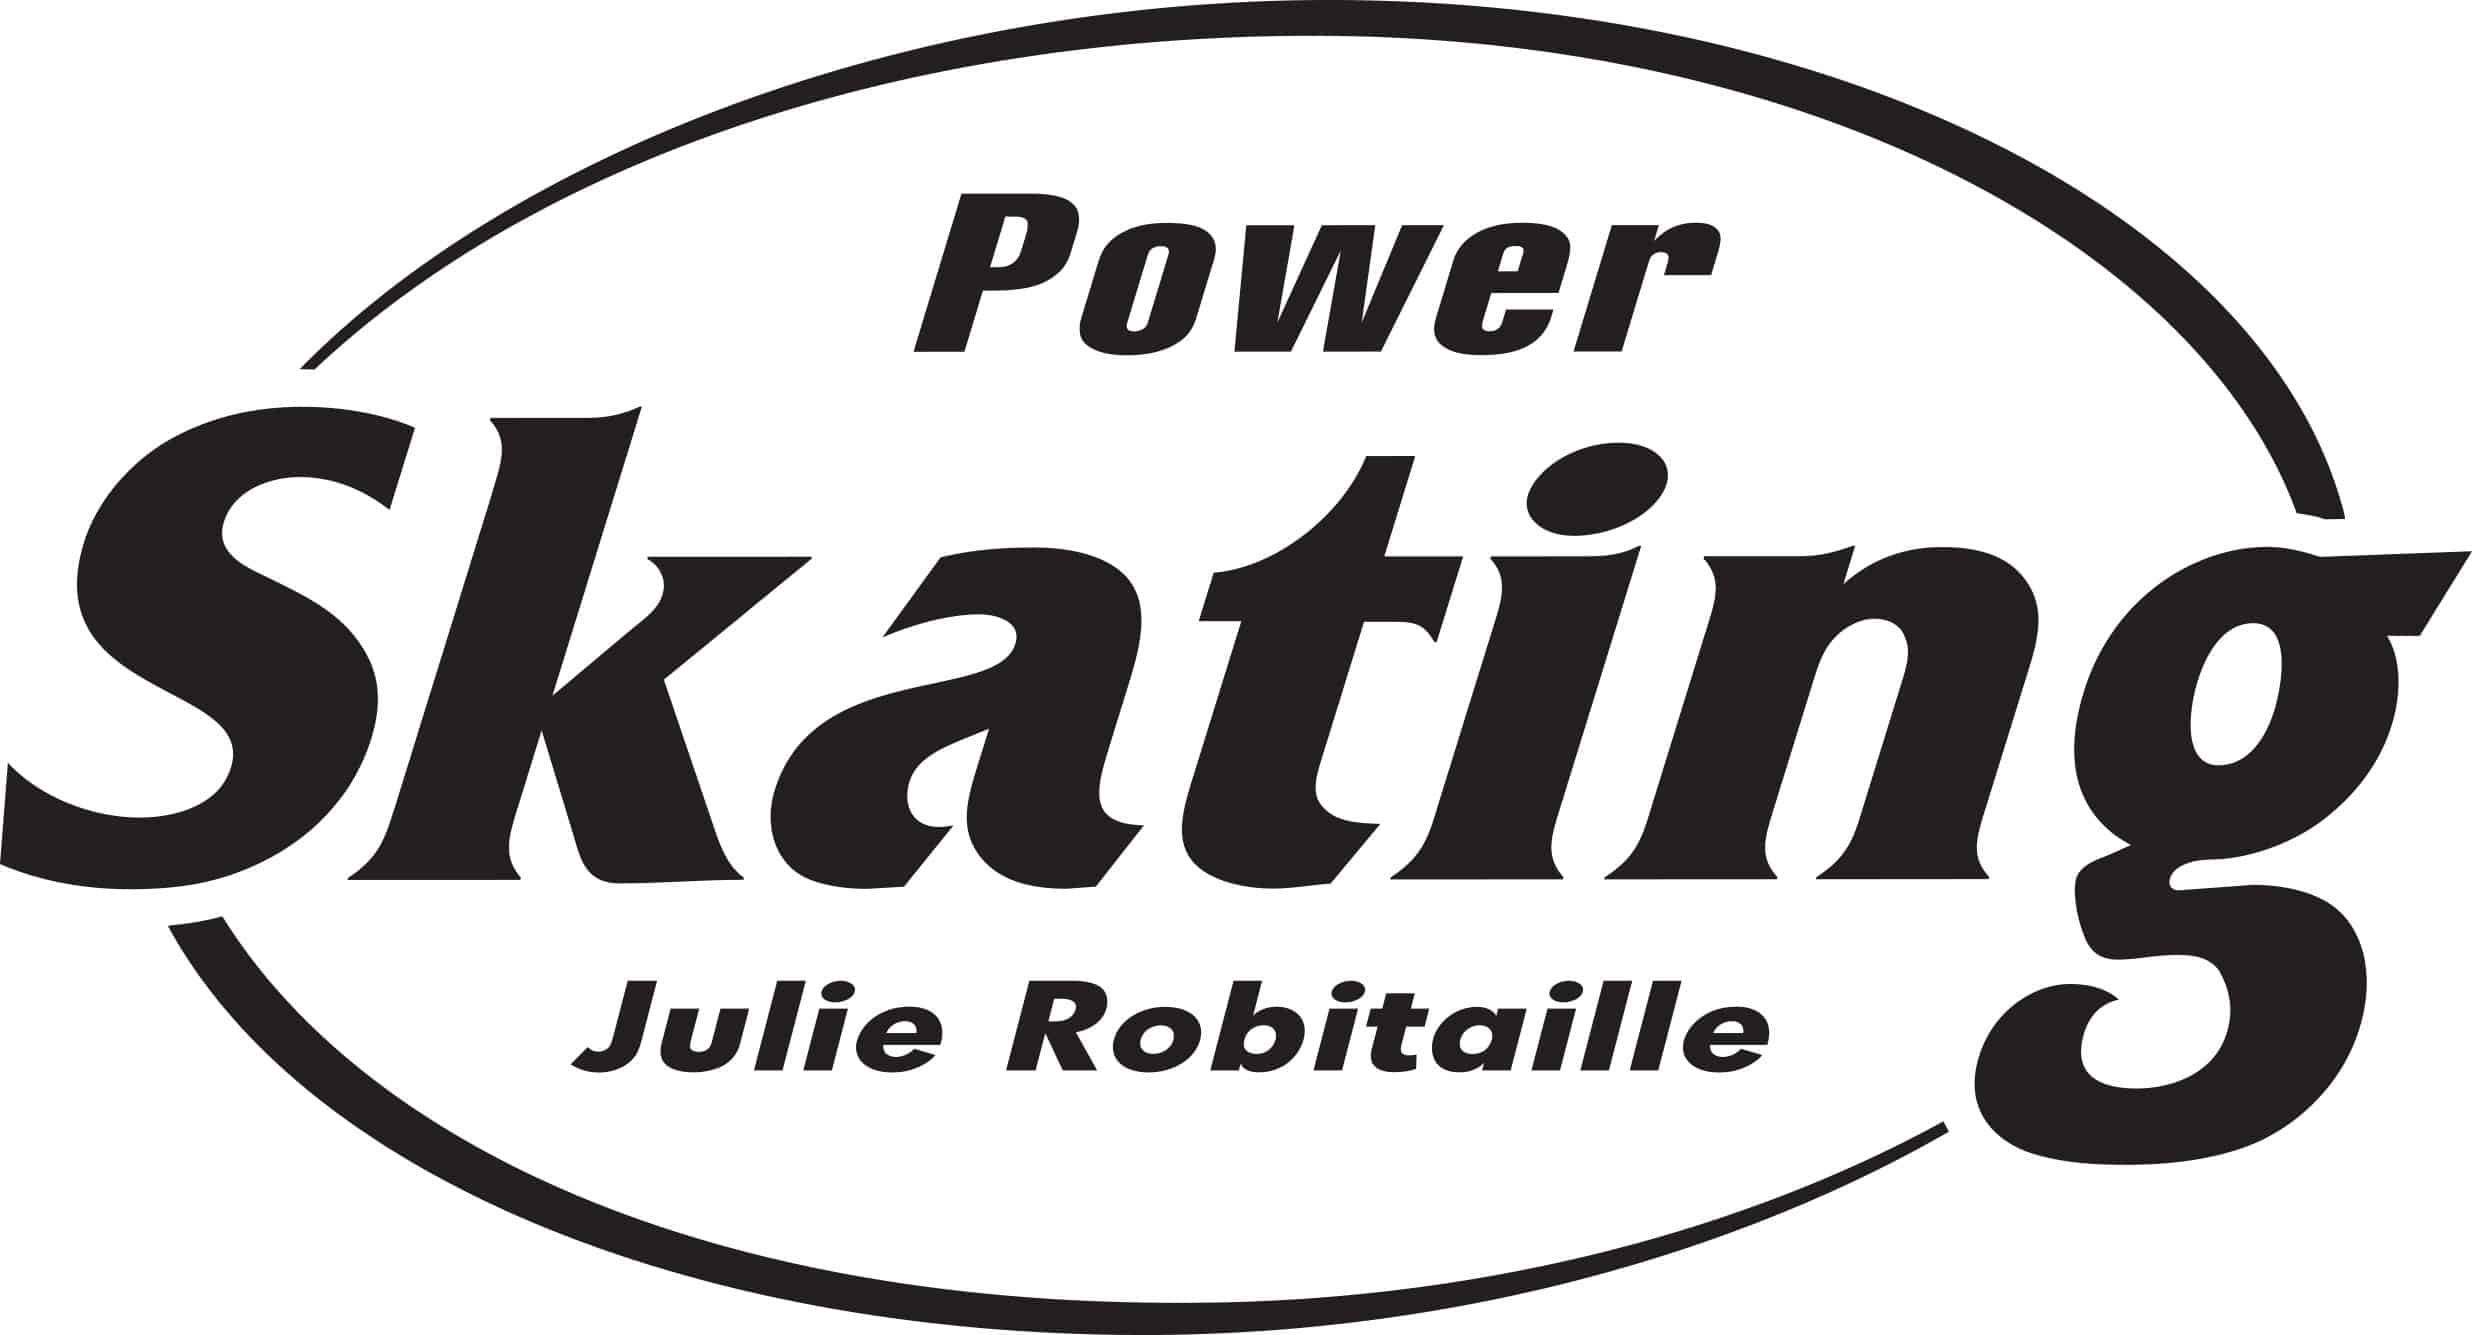 EPSJR - École de Power Skating Julie Robitaille